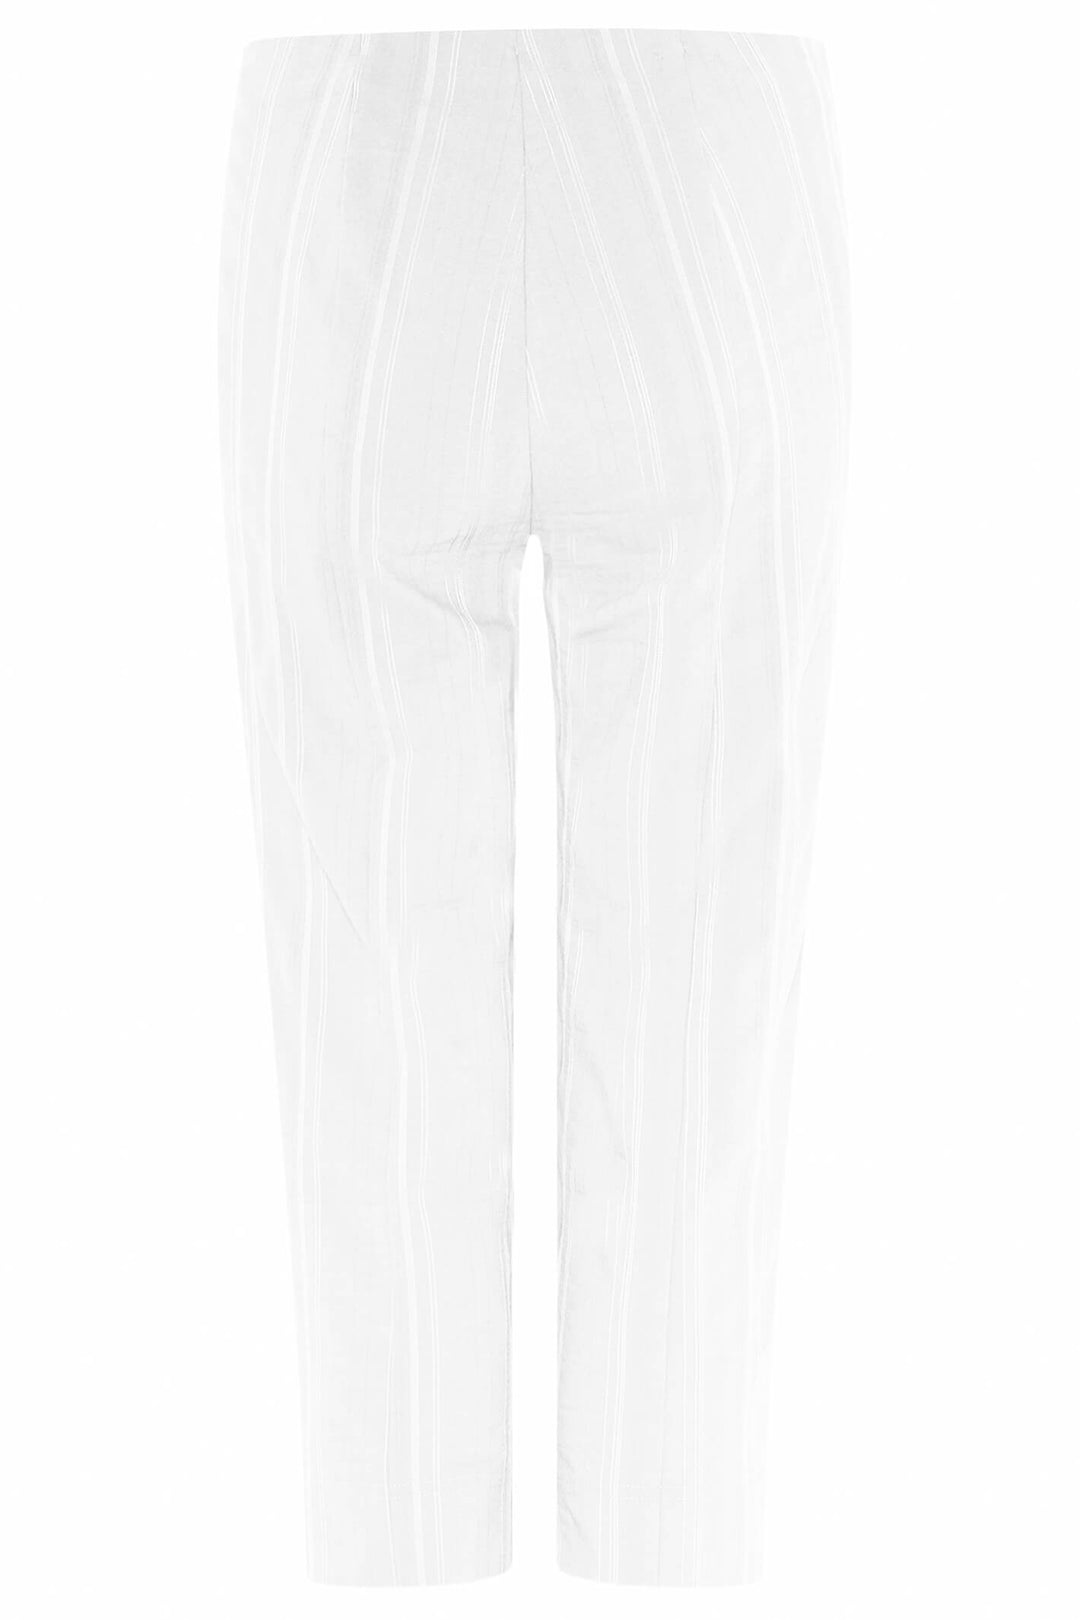 Robell Marie 07 White 10 Crop Trouser 55cm 51576-54554 - Olivia Grace Fashion